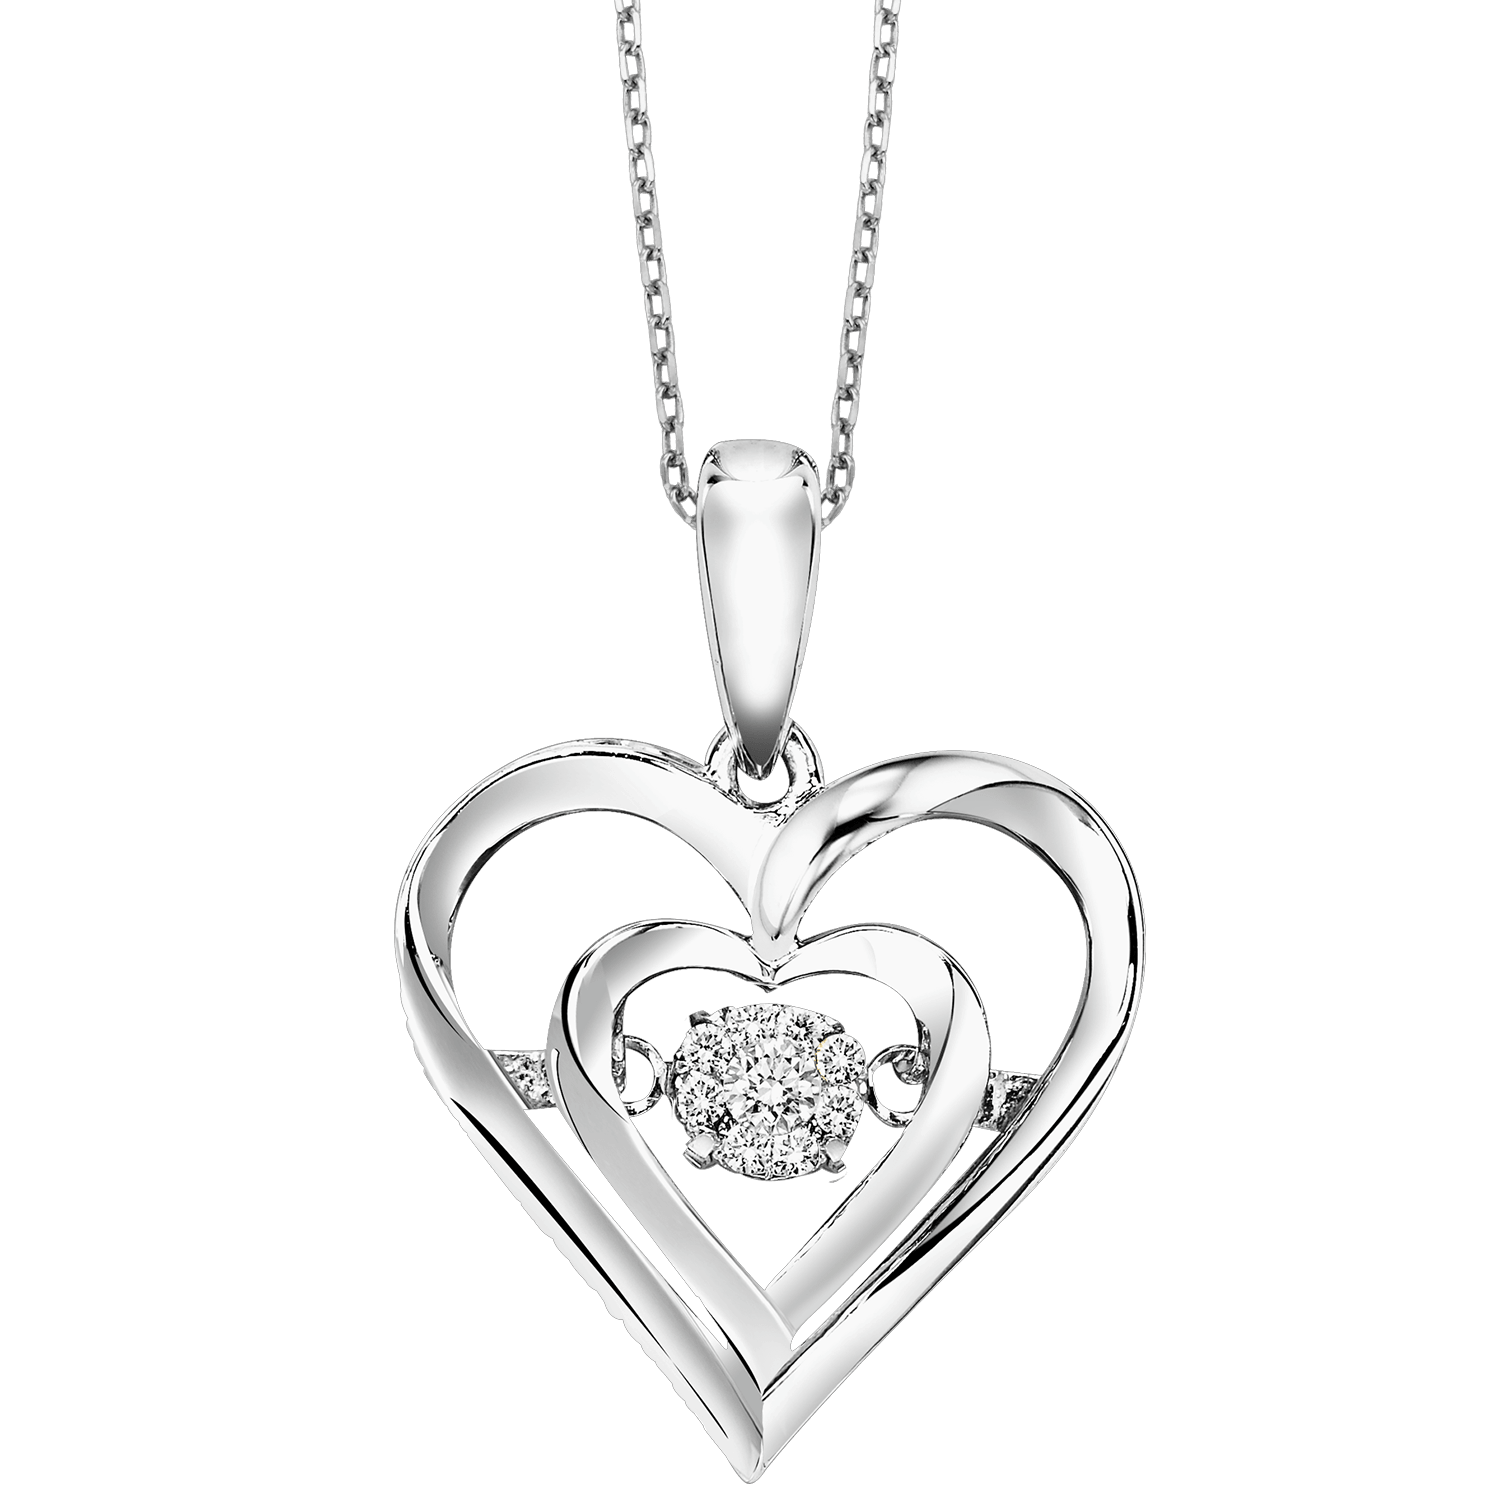 BW James Jewelers Pendant 16 Page Christmas Catalog Offer SS Diamond ROL Heart Fashion Pendant 1/50Ct